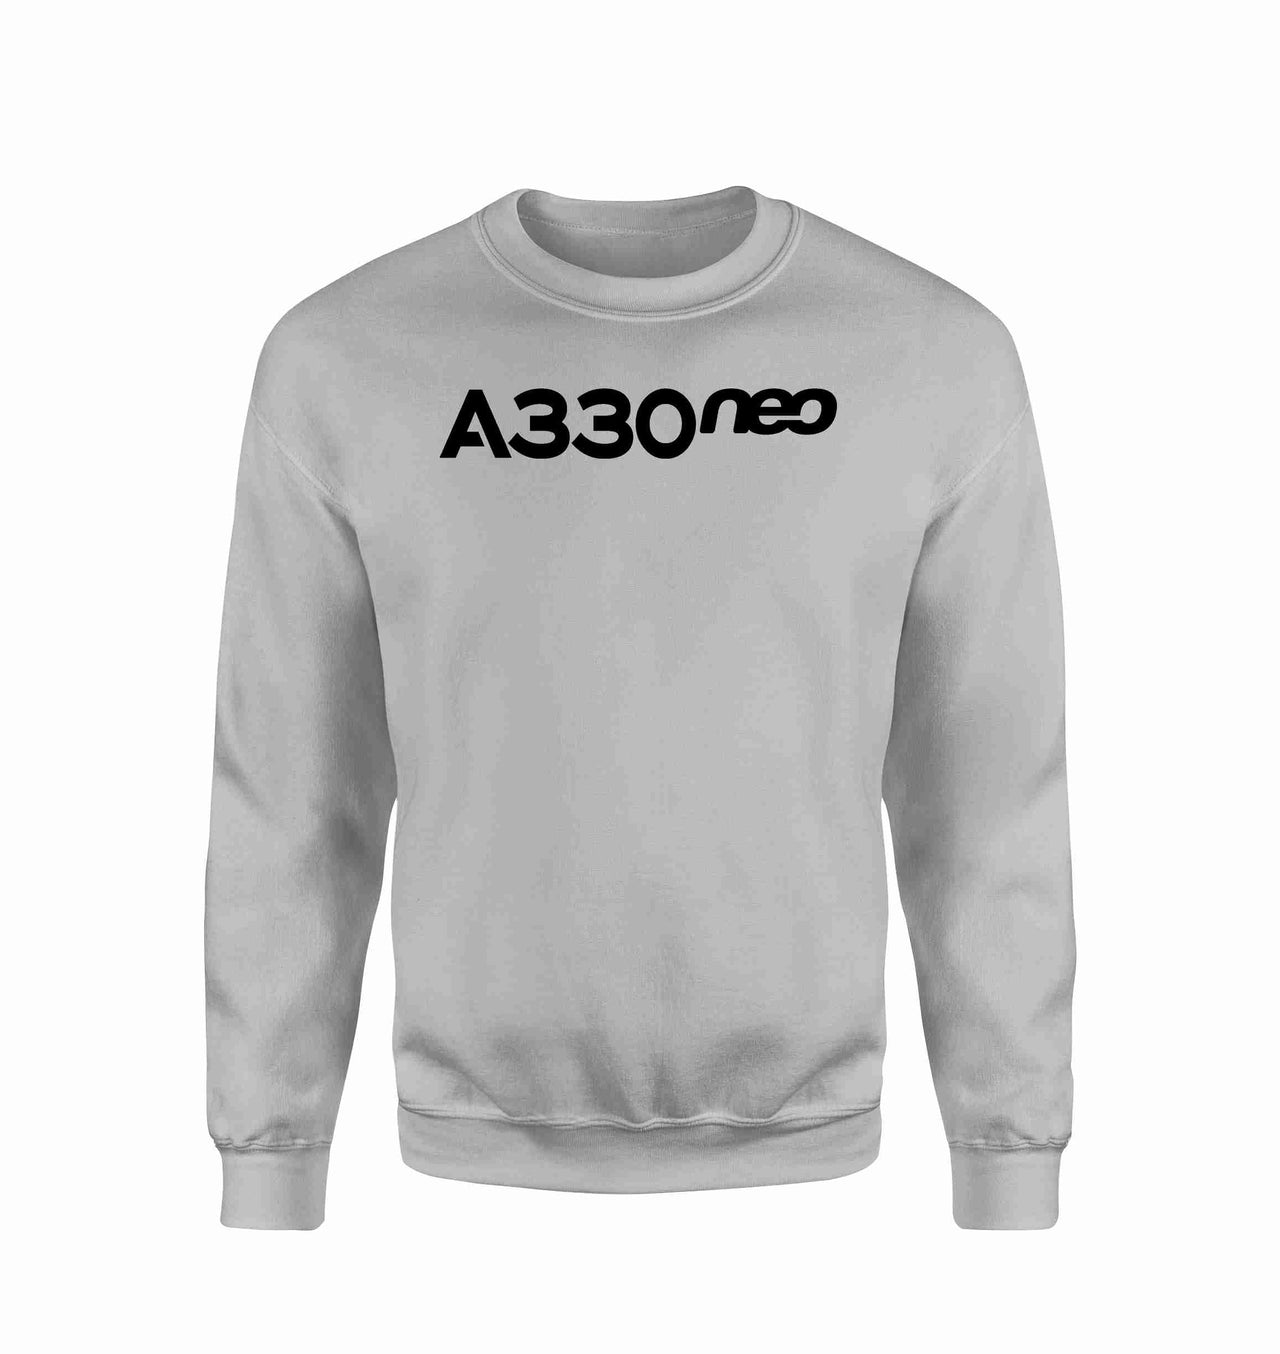 A330neo & Text Designed Sweatshirts